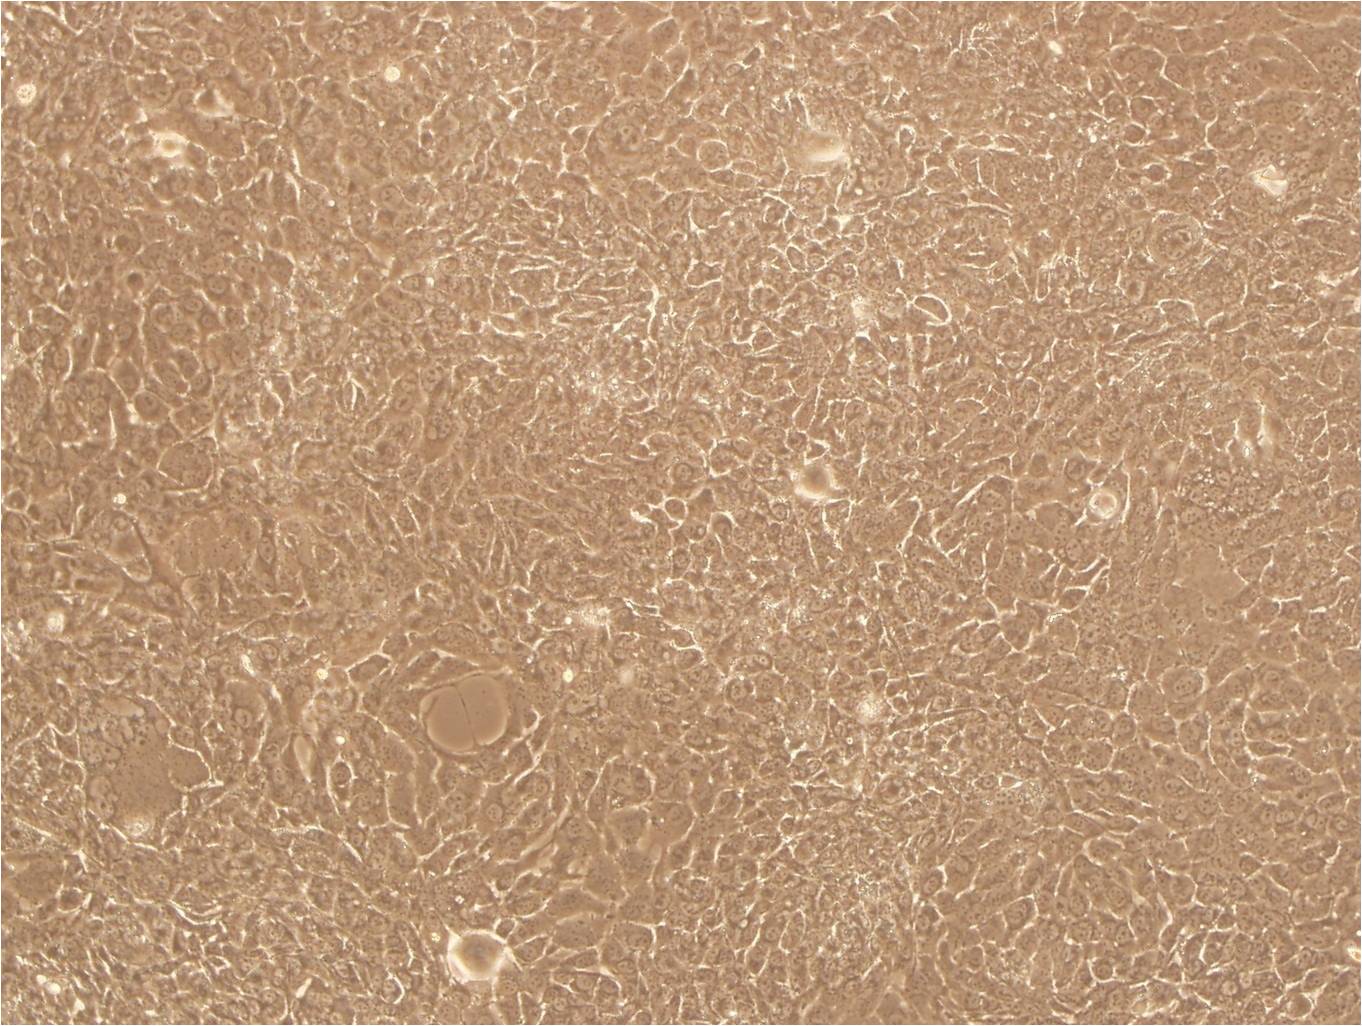 NCI-H2106:人非小细胞肺癌复苏细胞(提供STR鉴定图谱),NCI-H2106